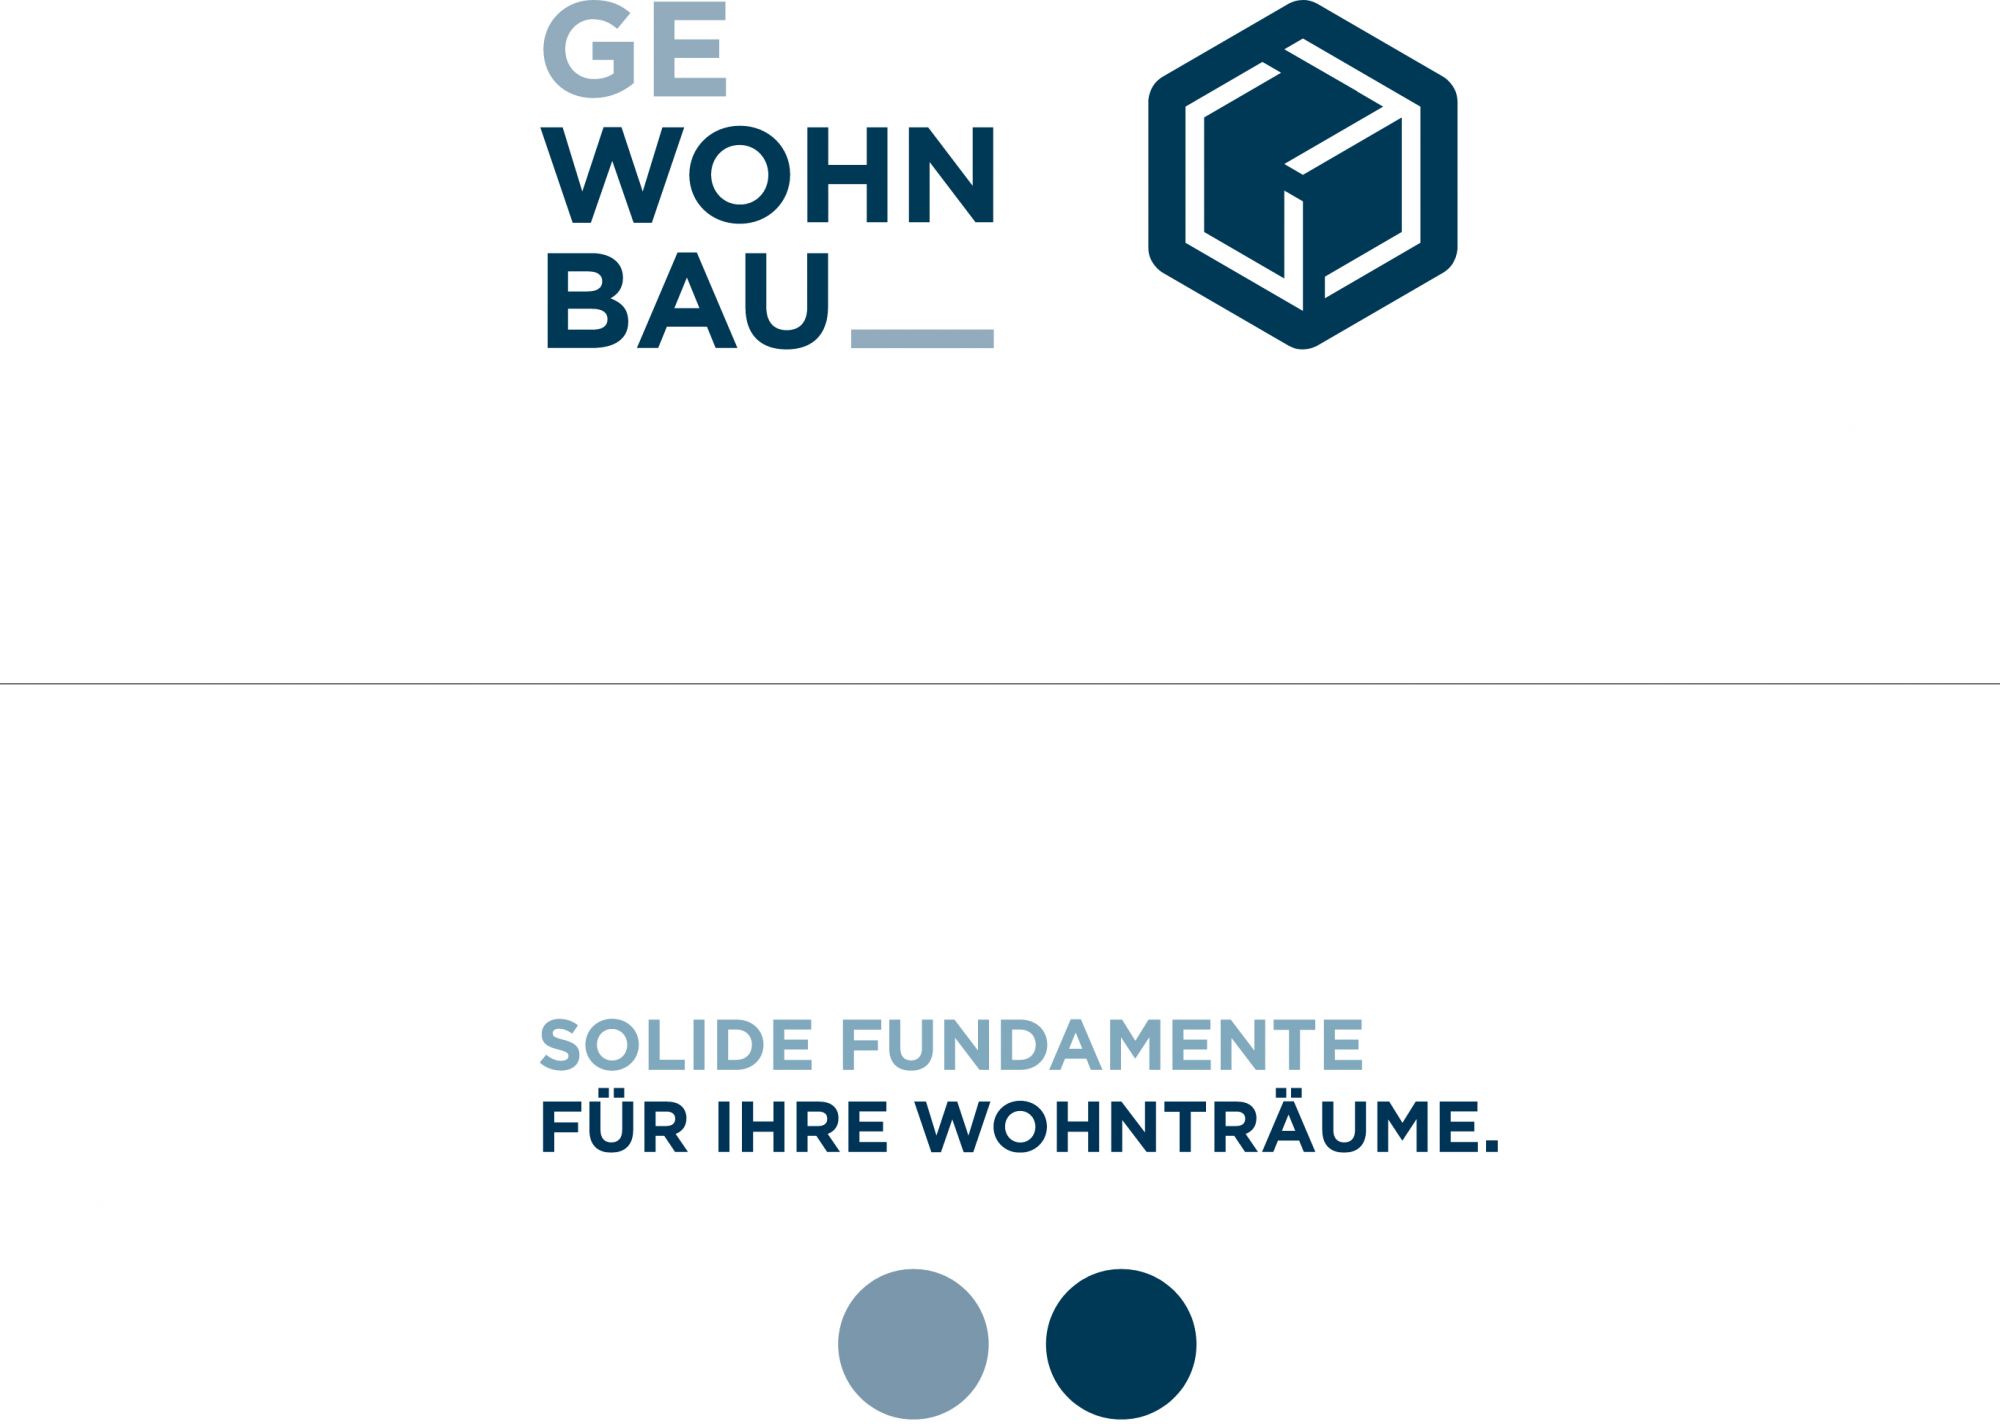 Werbeagentur in Nürnberg, Erfurt und Rosenheim - Logodesign